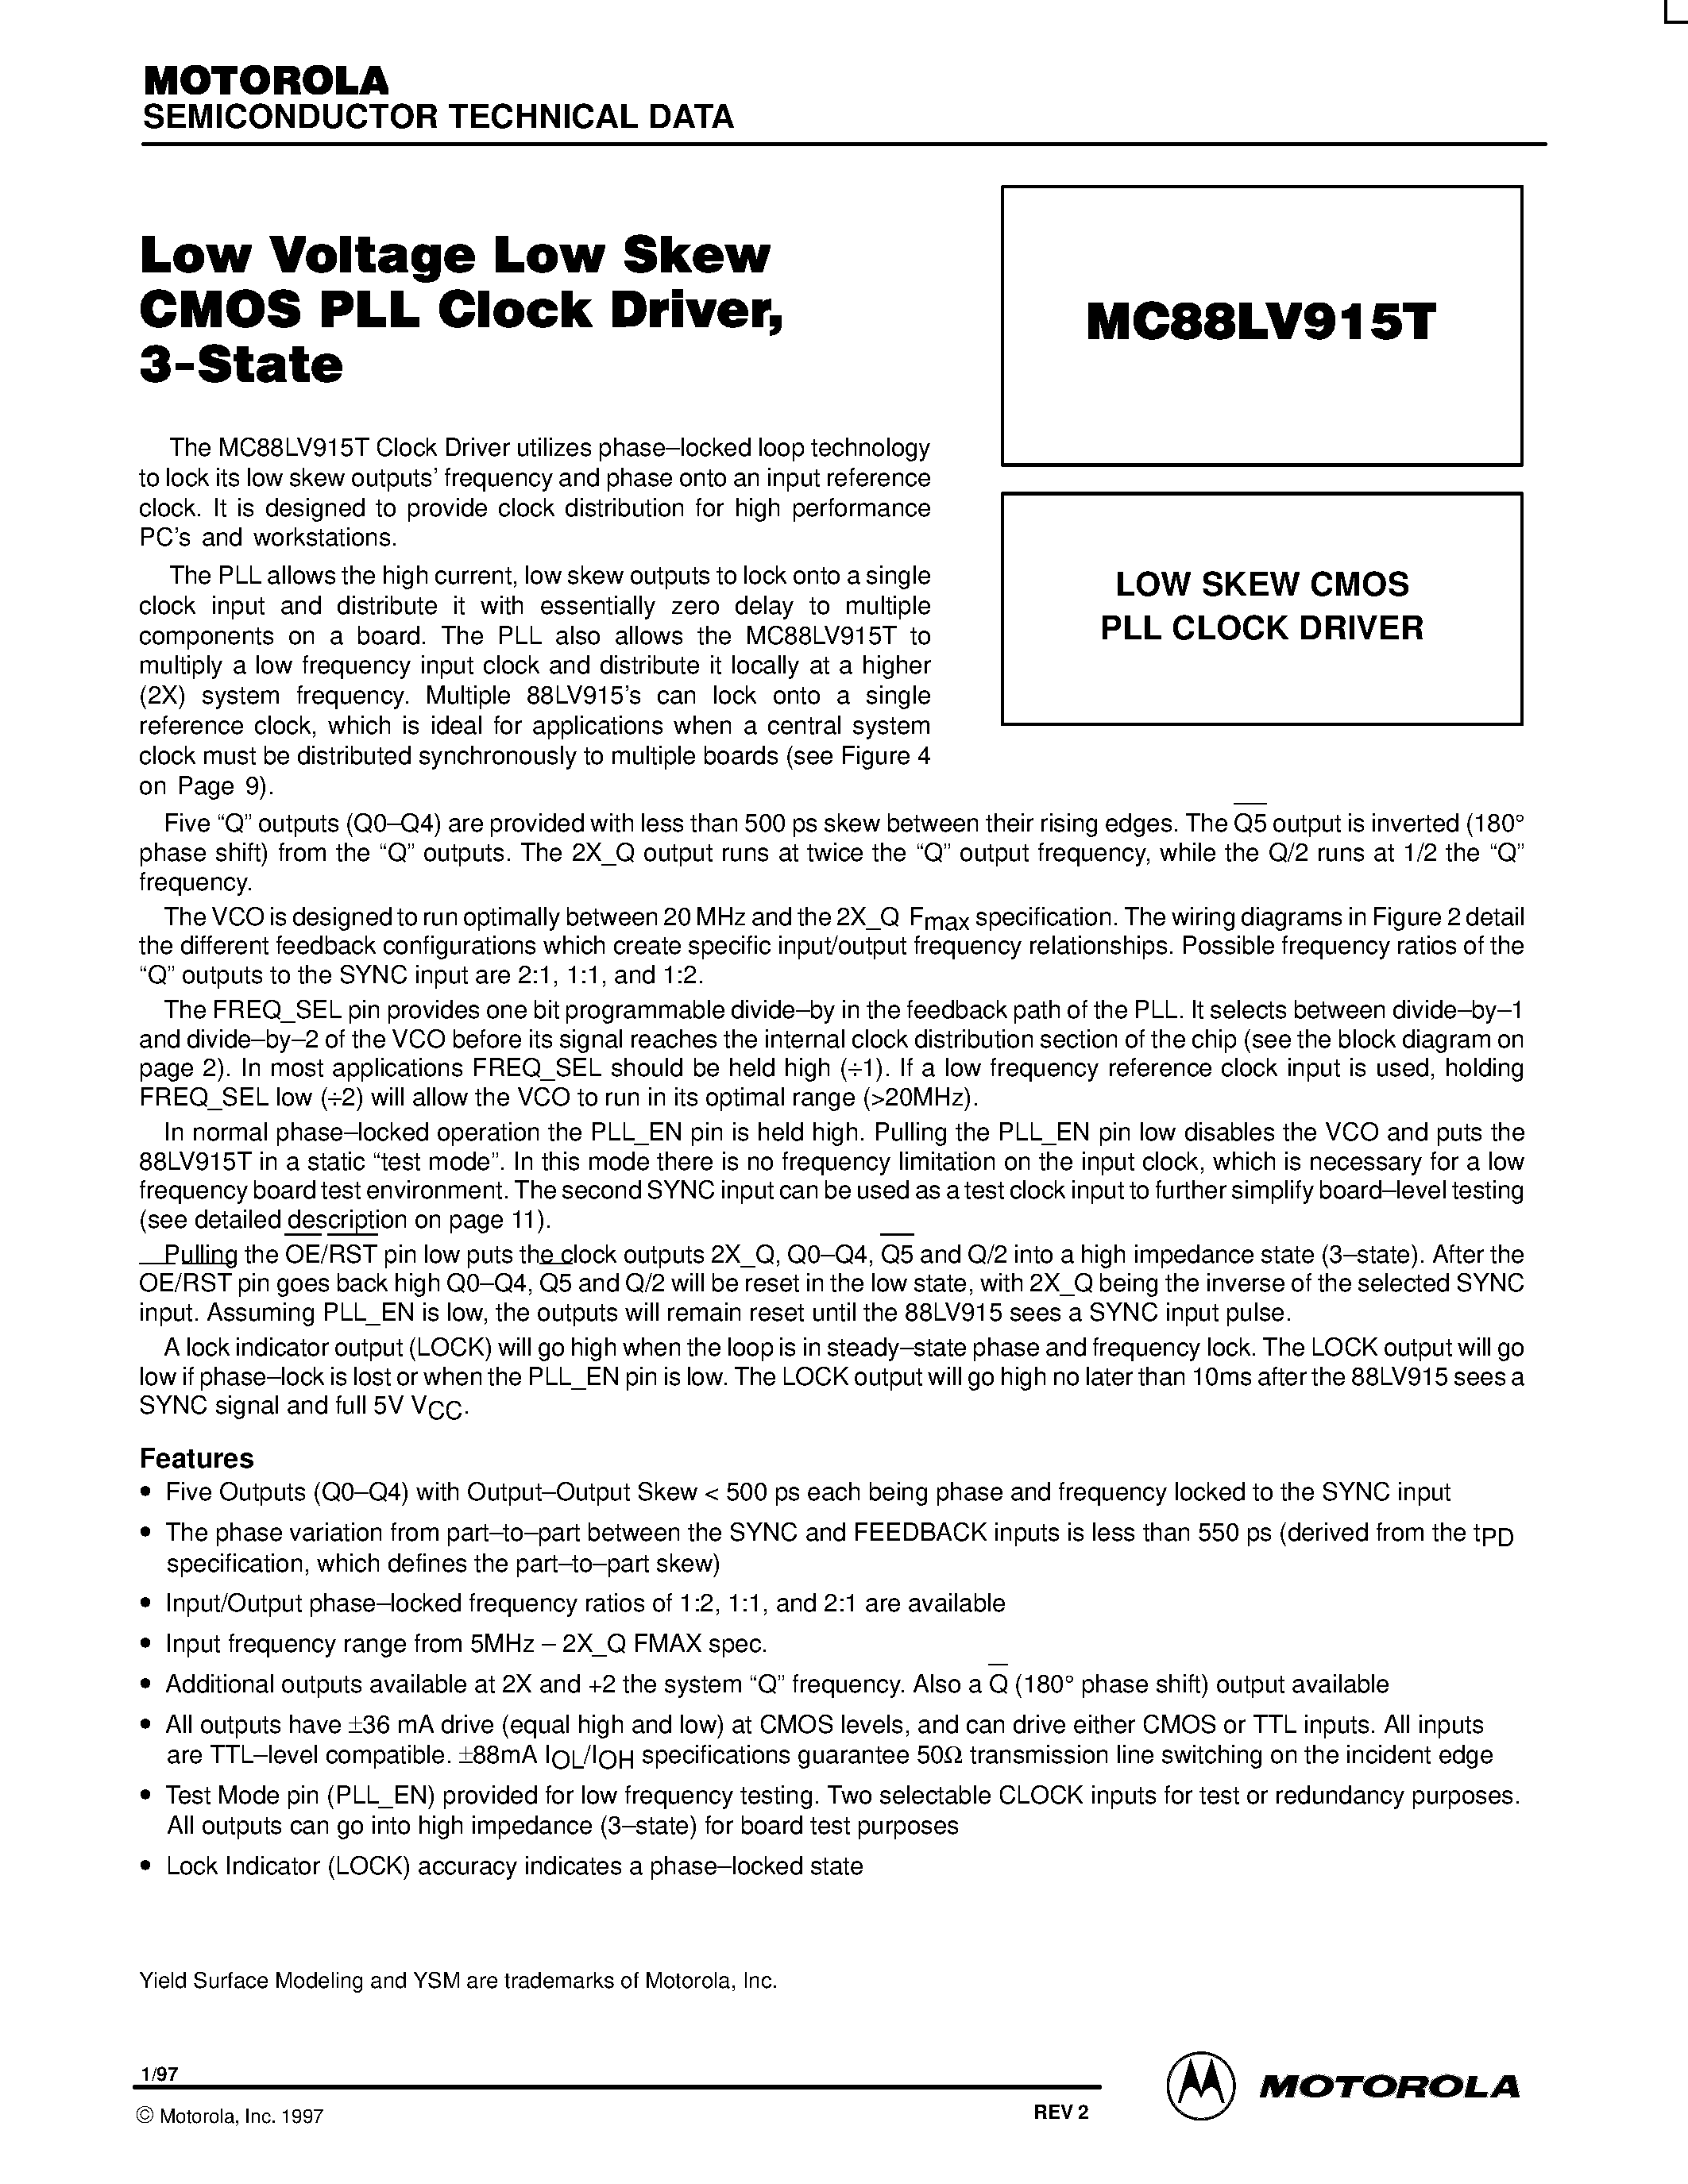 Datasheet MC88LV915T - LOW SKEW CMOS PLL CLOCK DRIVER page 1